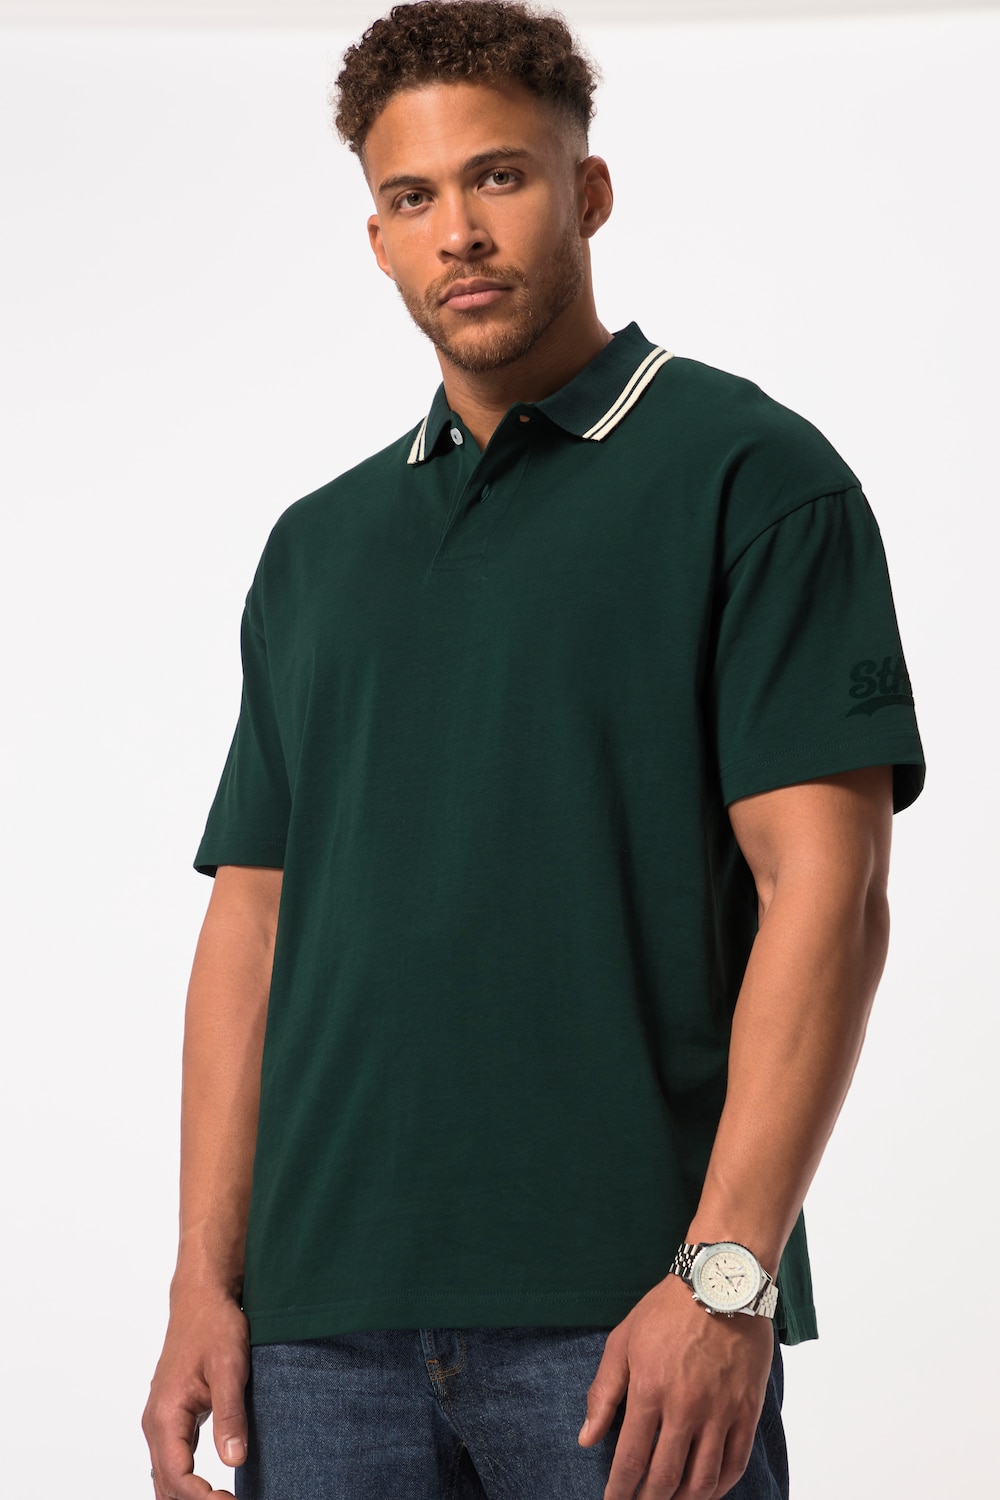 STHUGE Poloshirt, Halbarm, oversized, bis 8 XL